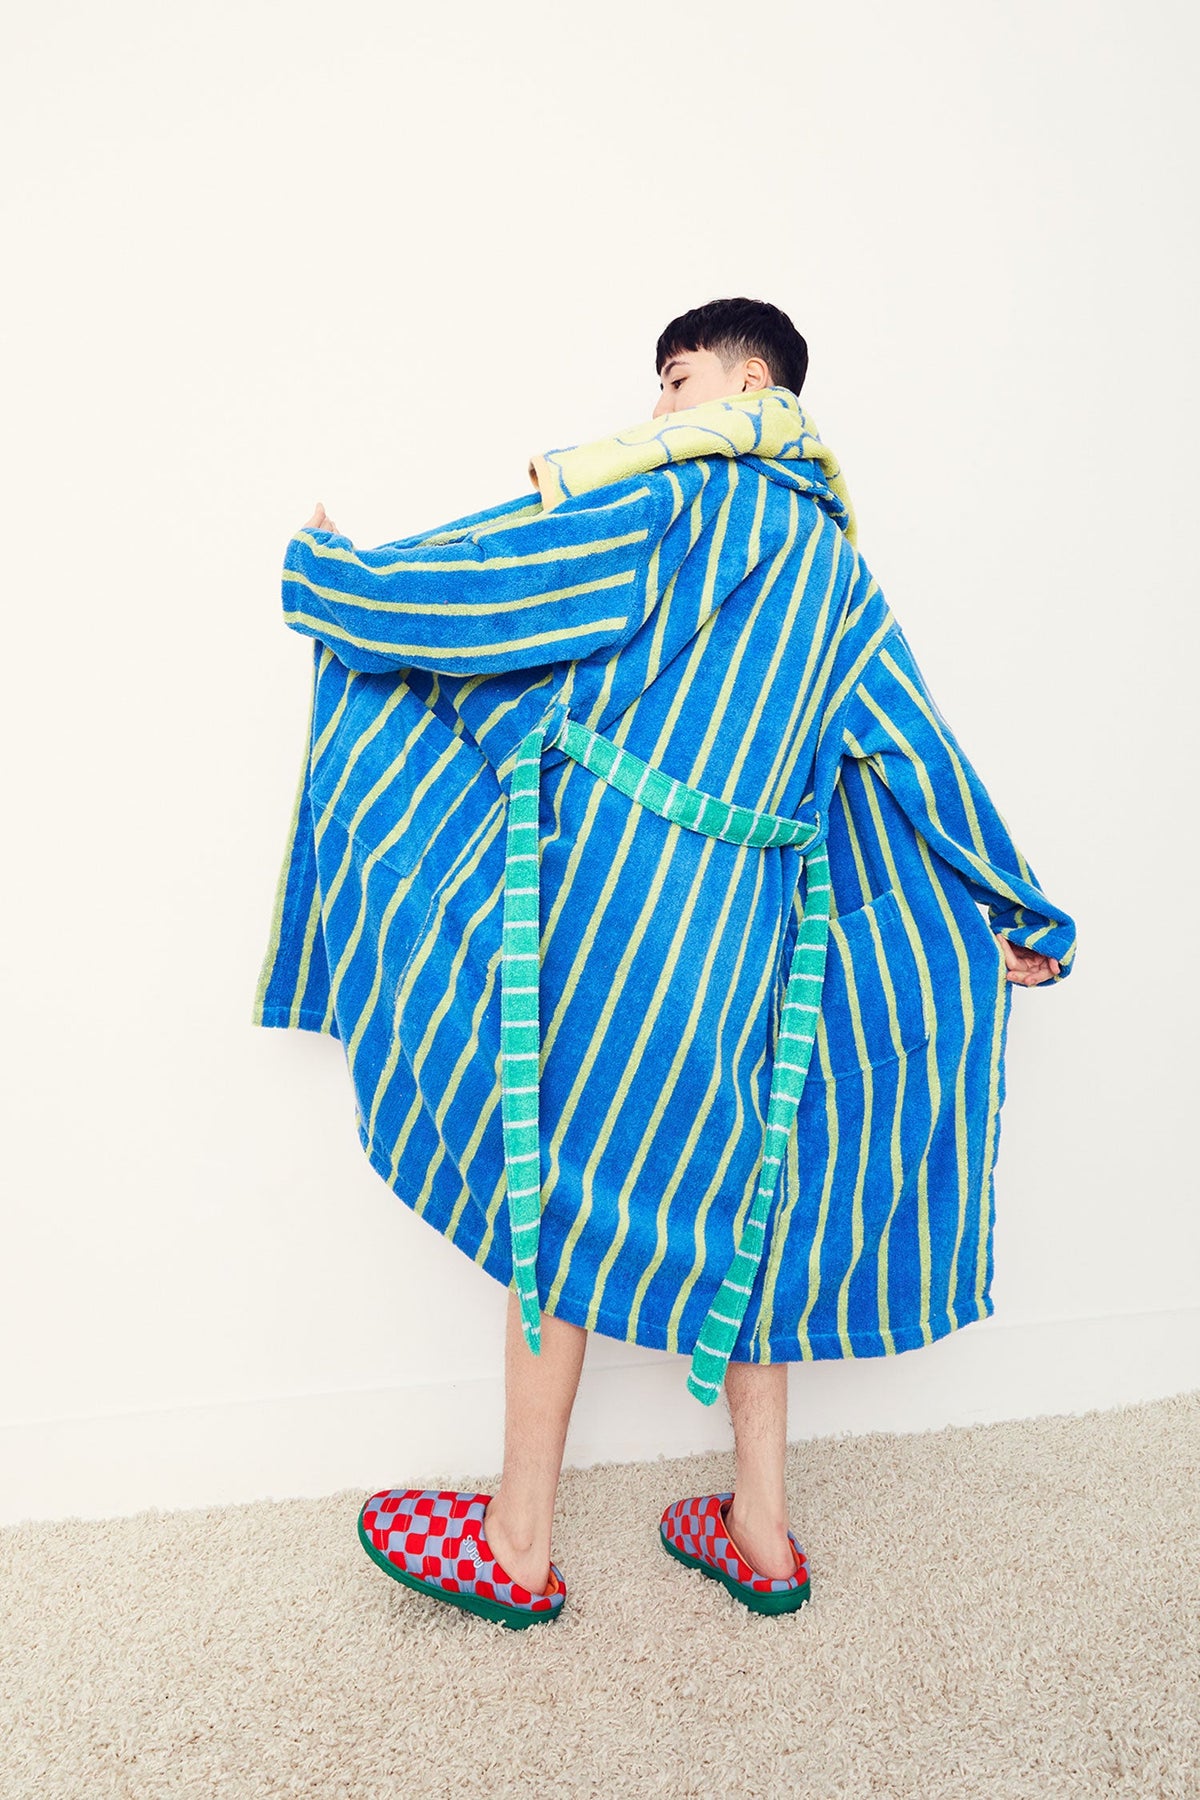 Dusen Dusen Striped Bathrobe – MoMA Design Store